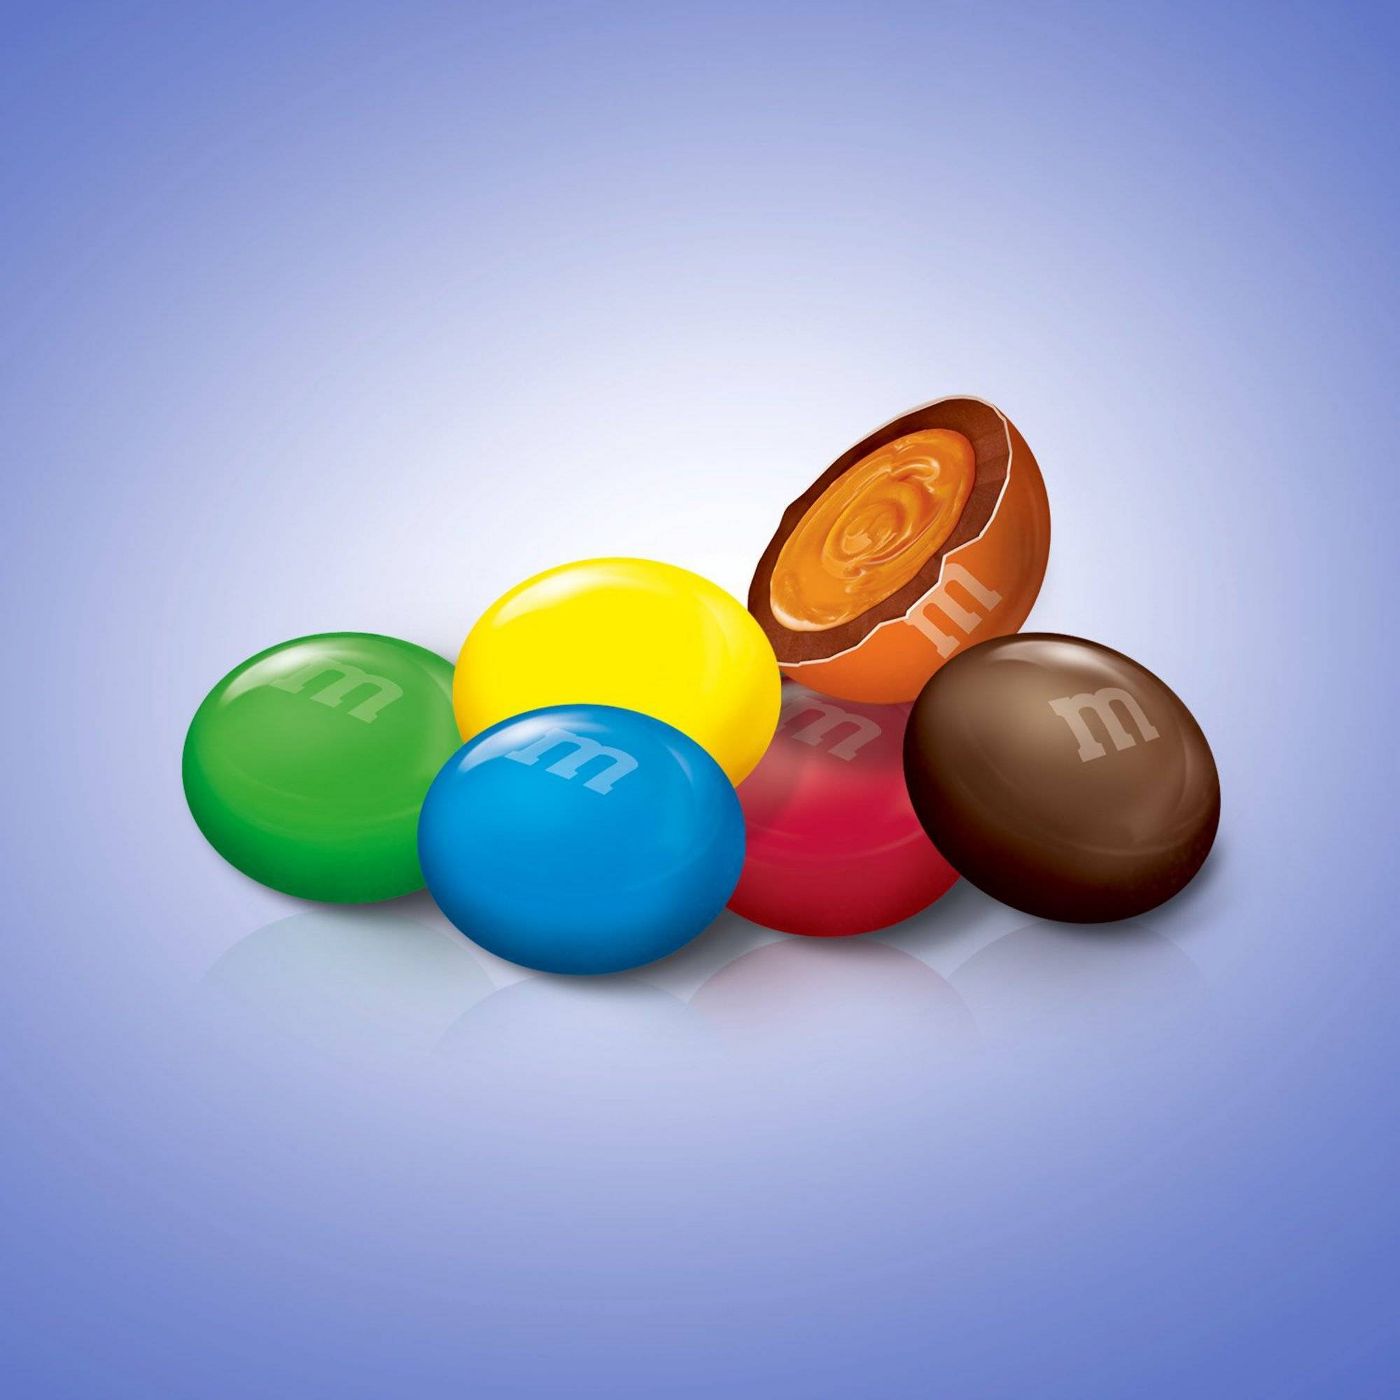 M&M'S Peanut Butter Chocolate Candy Bag, 18.4 oz